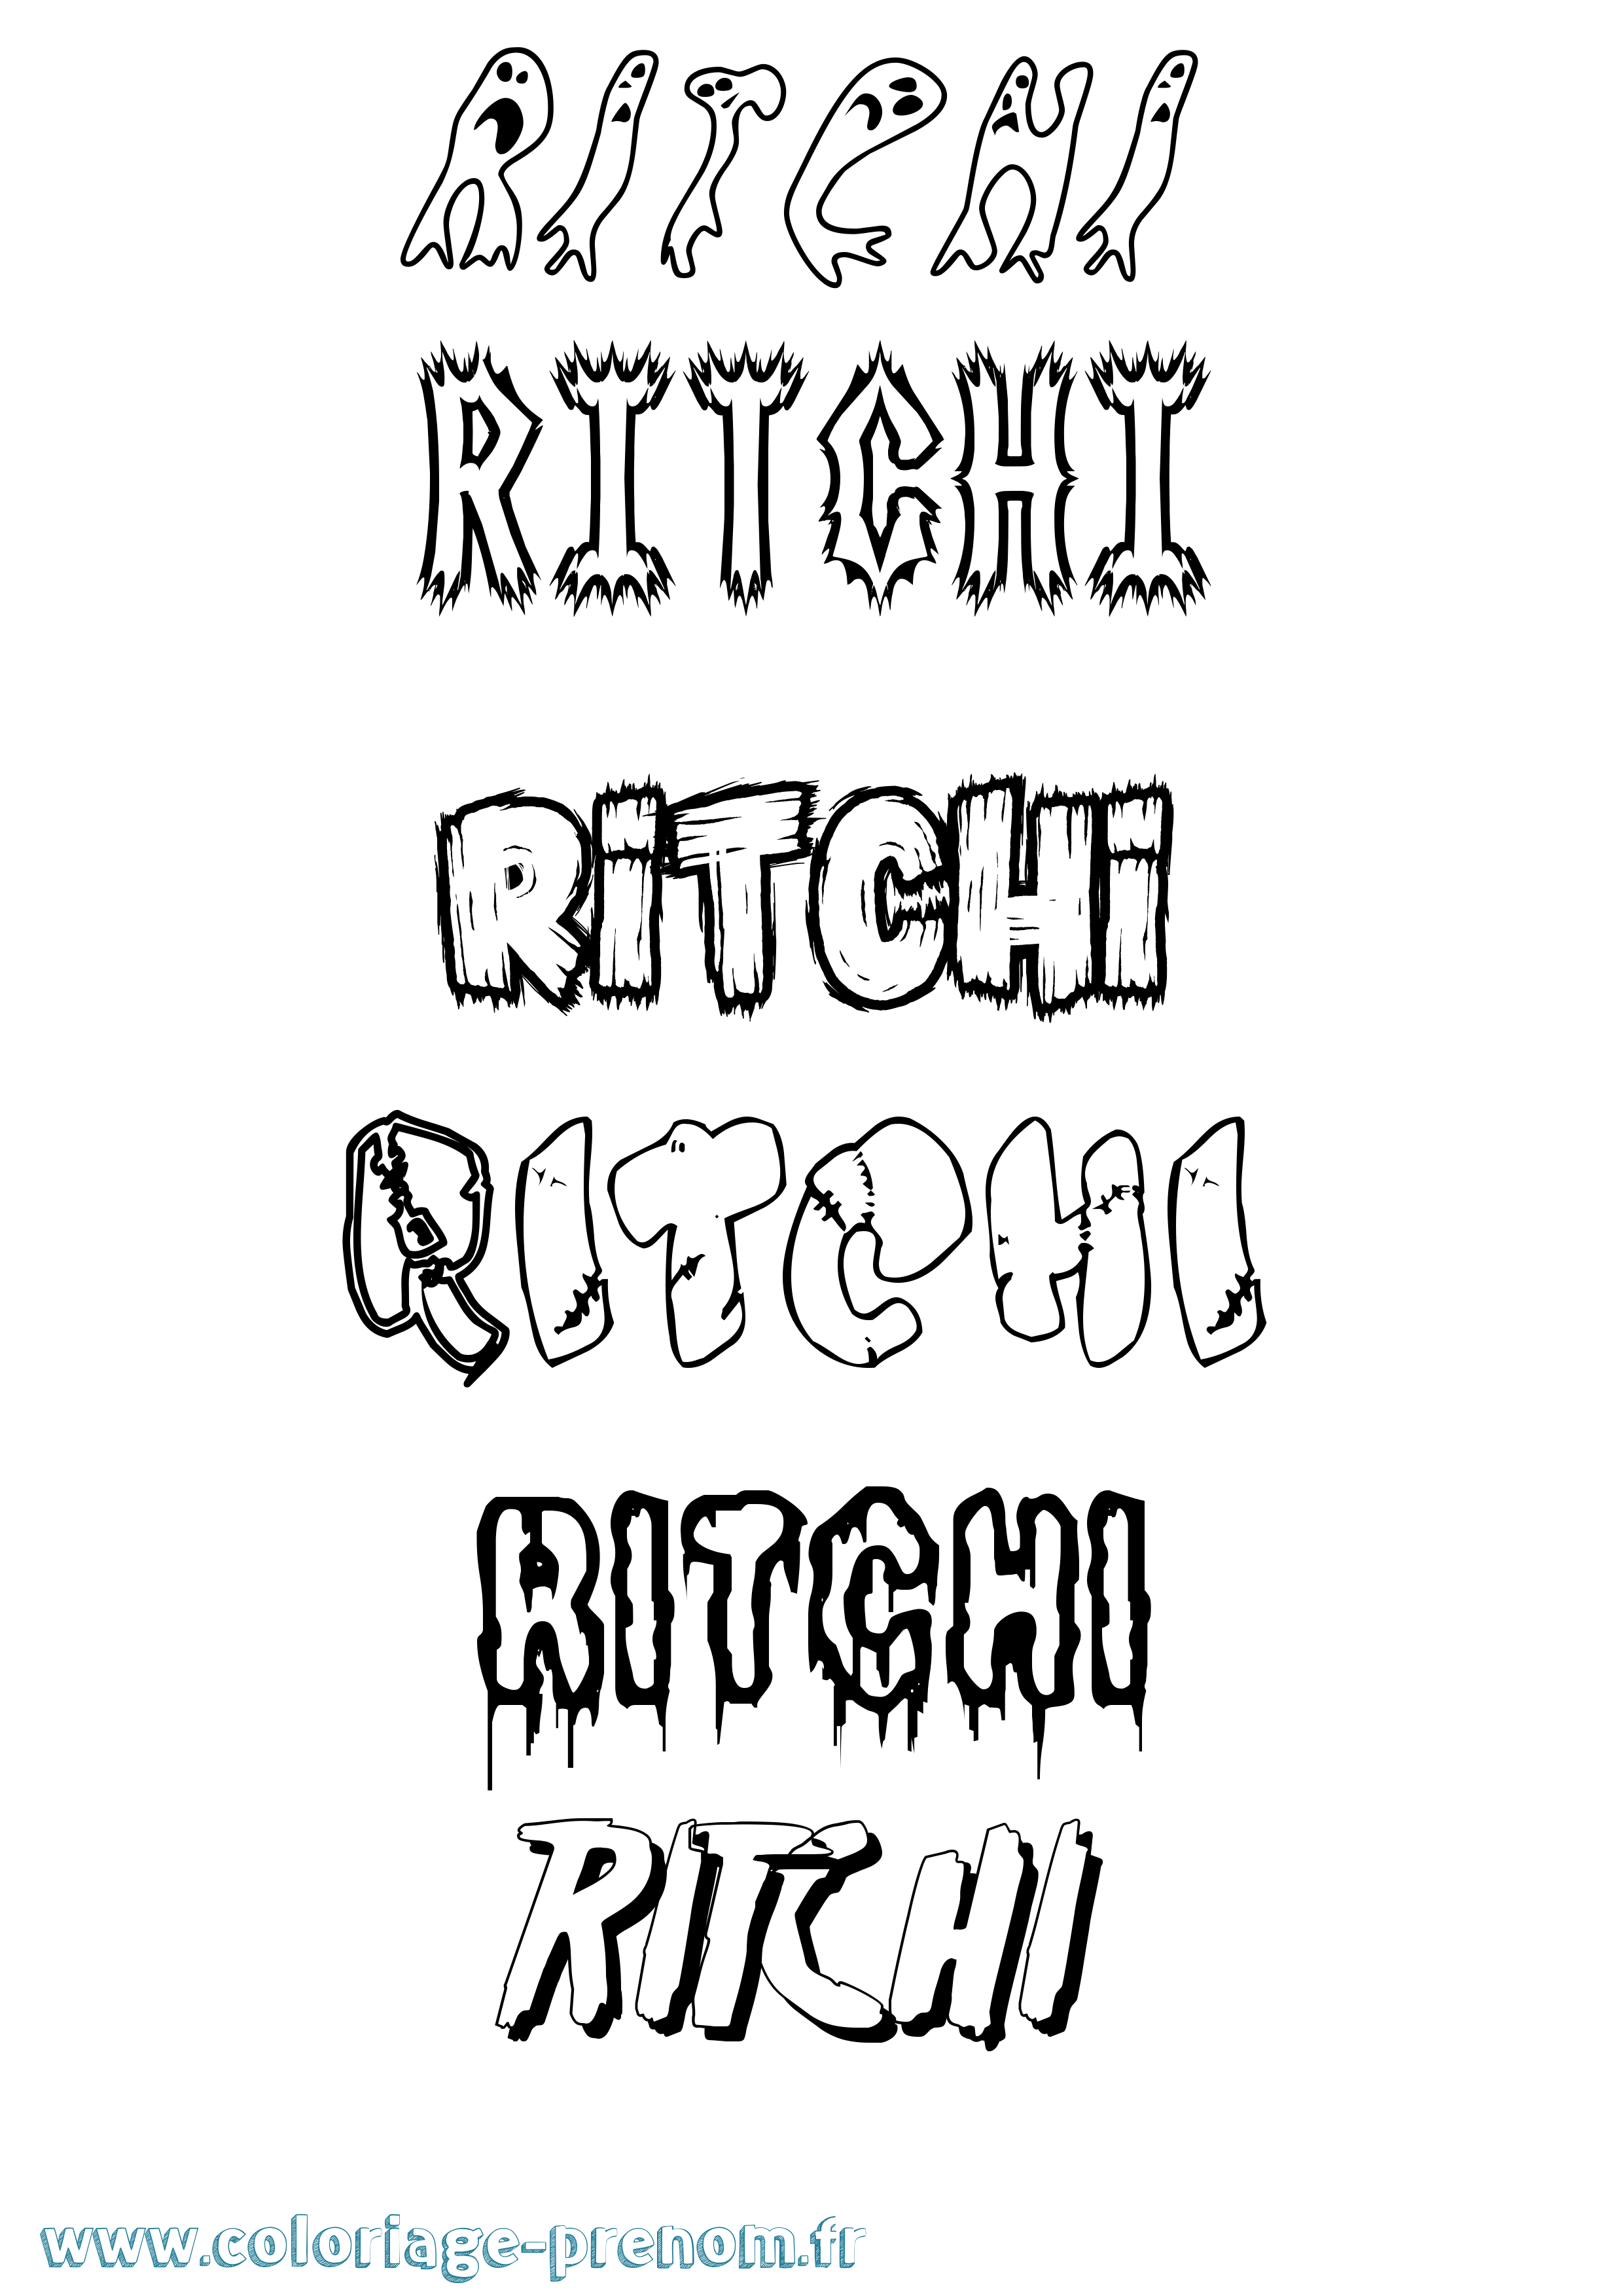 Coloriage prénom Ritchi Frisson